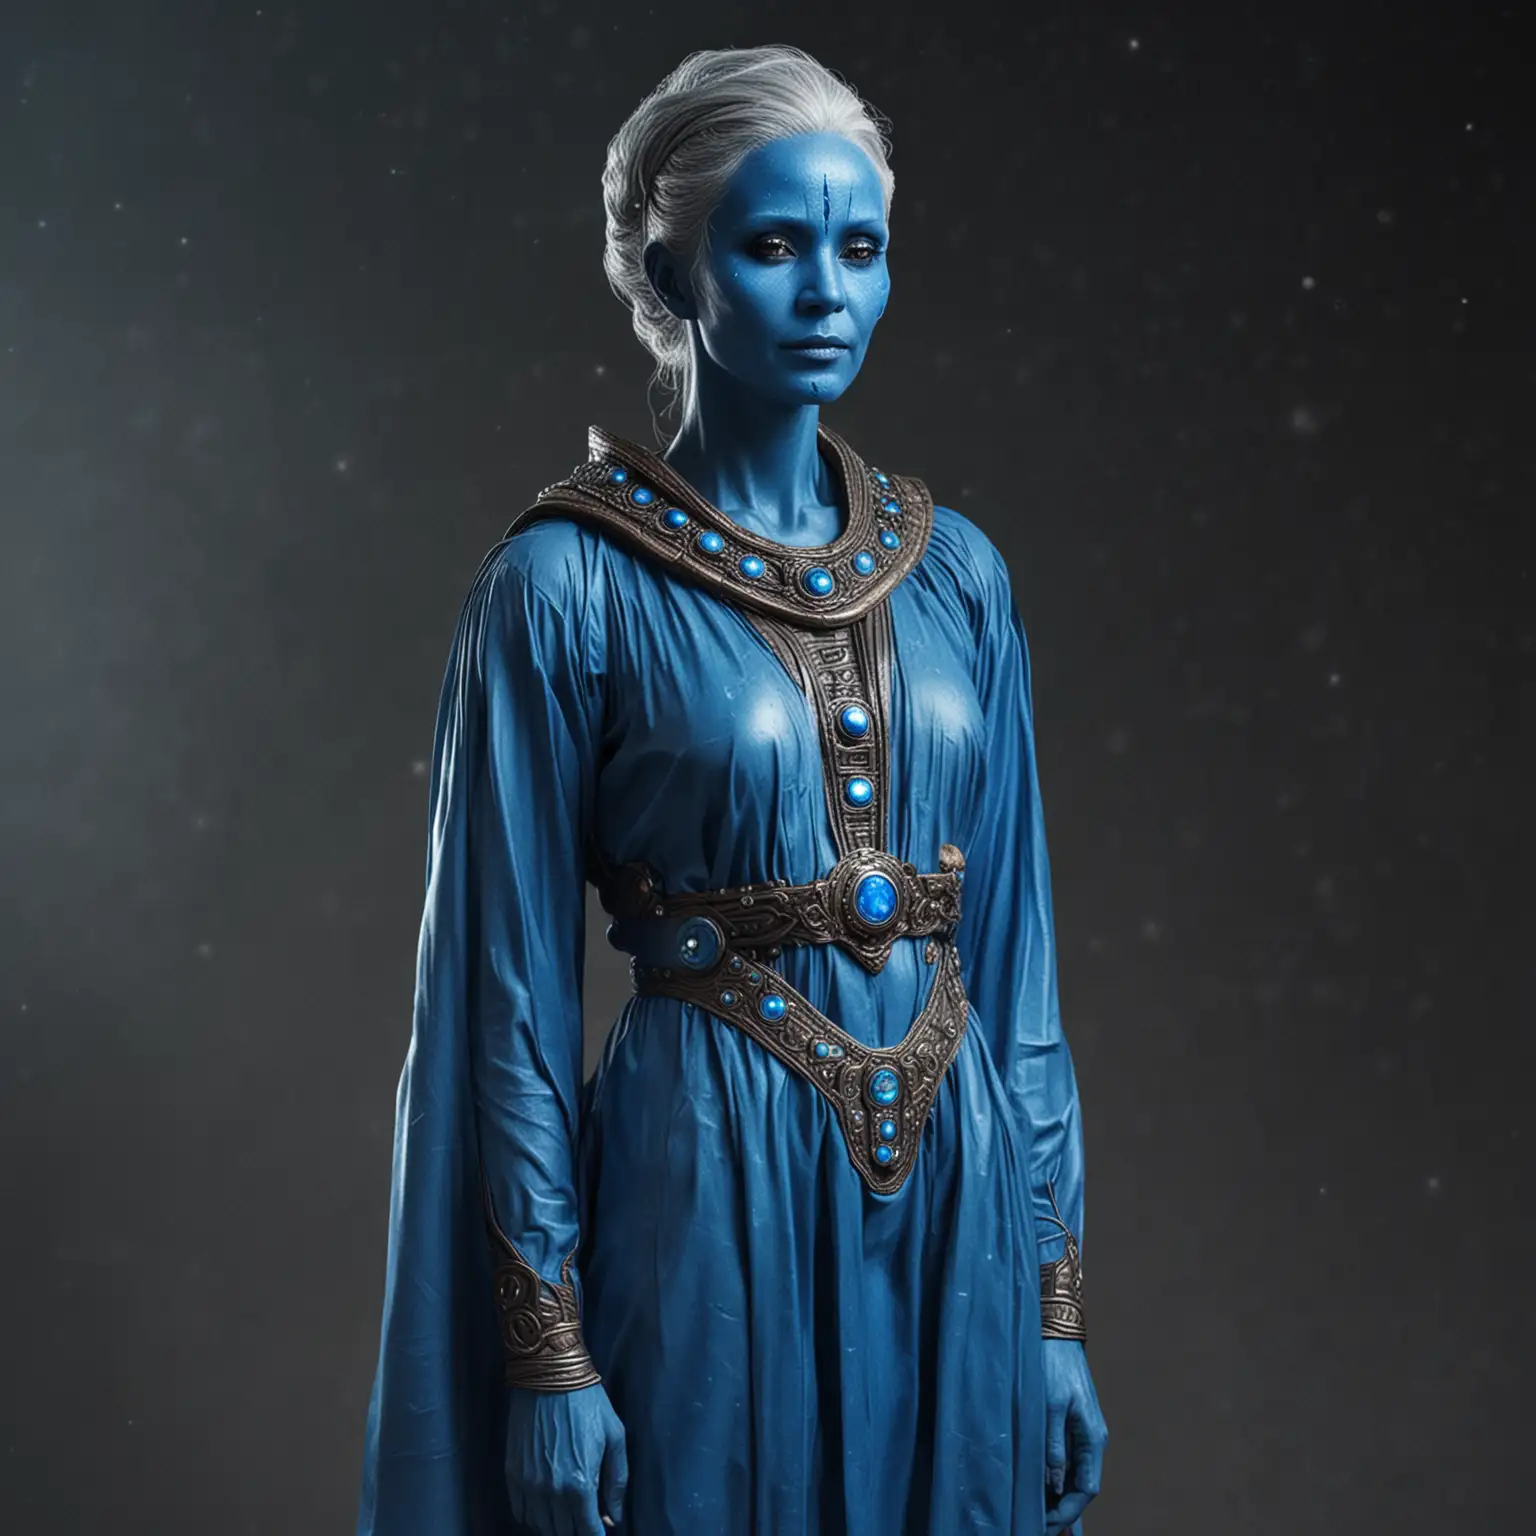 Galactic Andromedan Female in Shining Blue Robe